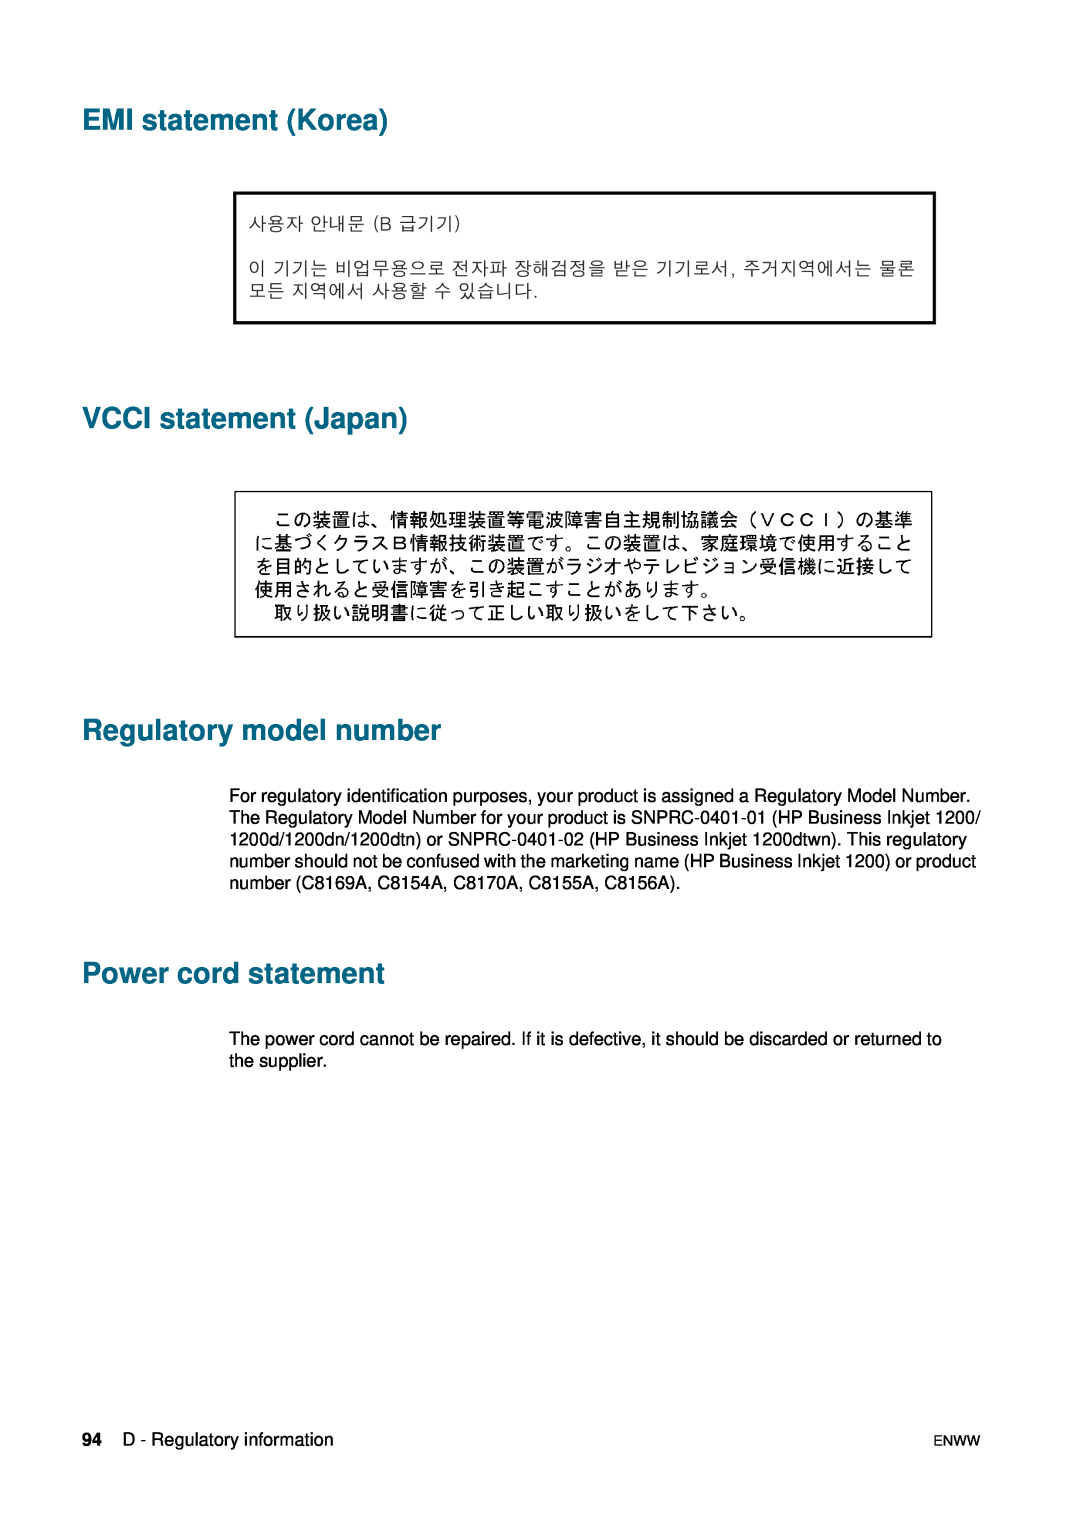 HP 1200 manual EMI statement Korea VCCI statement Japan Regulatory model number, Power cord statement 